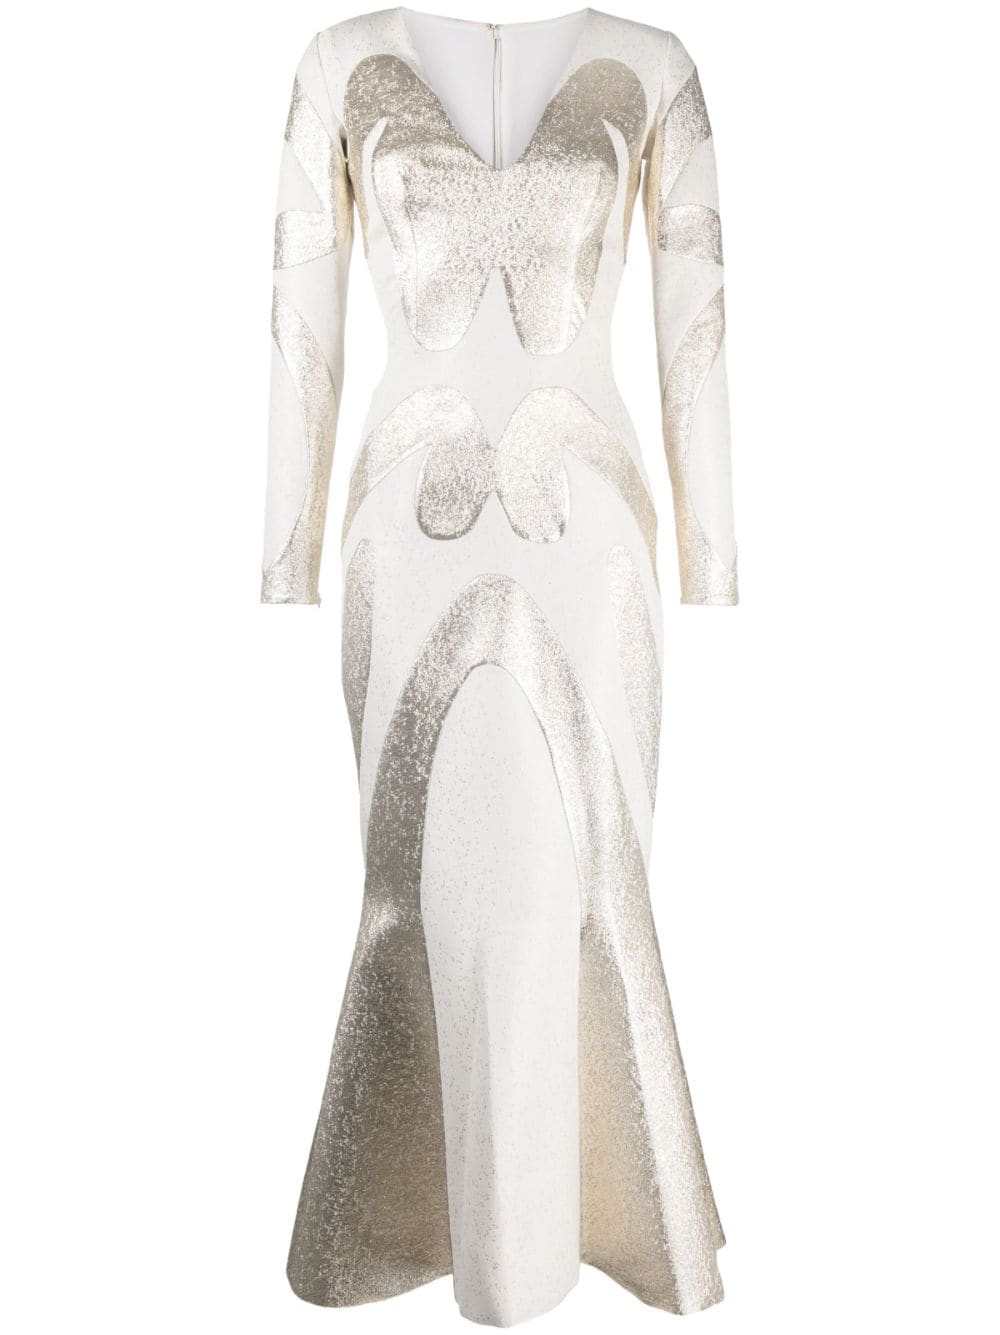 Saiid Kobeisy Brocade-effect Long-sleeve Dress In White